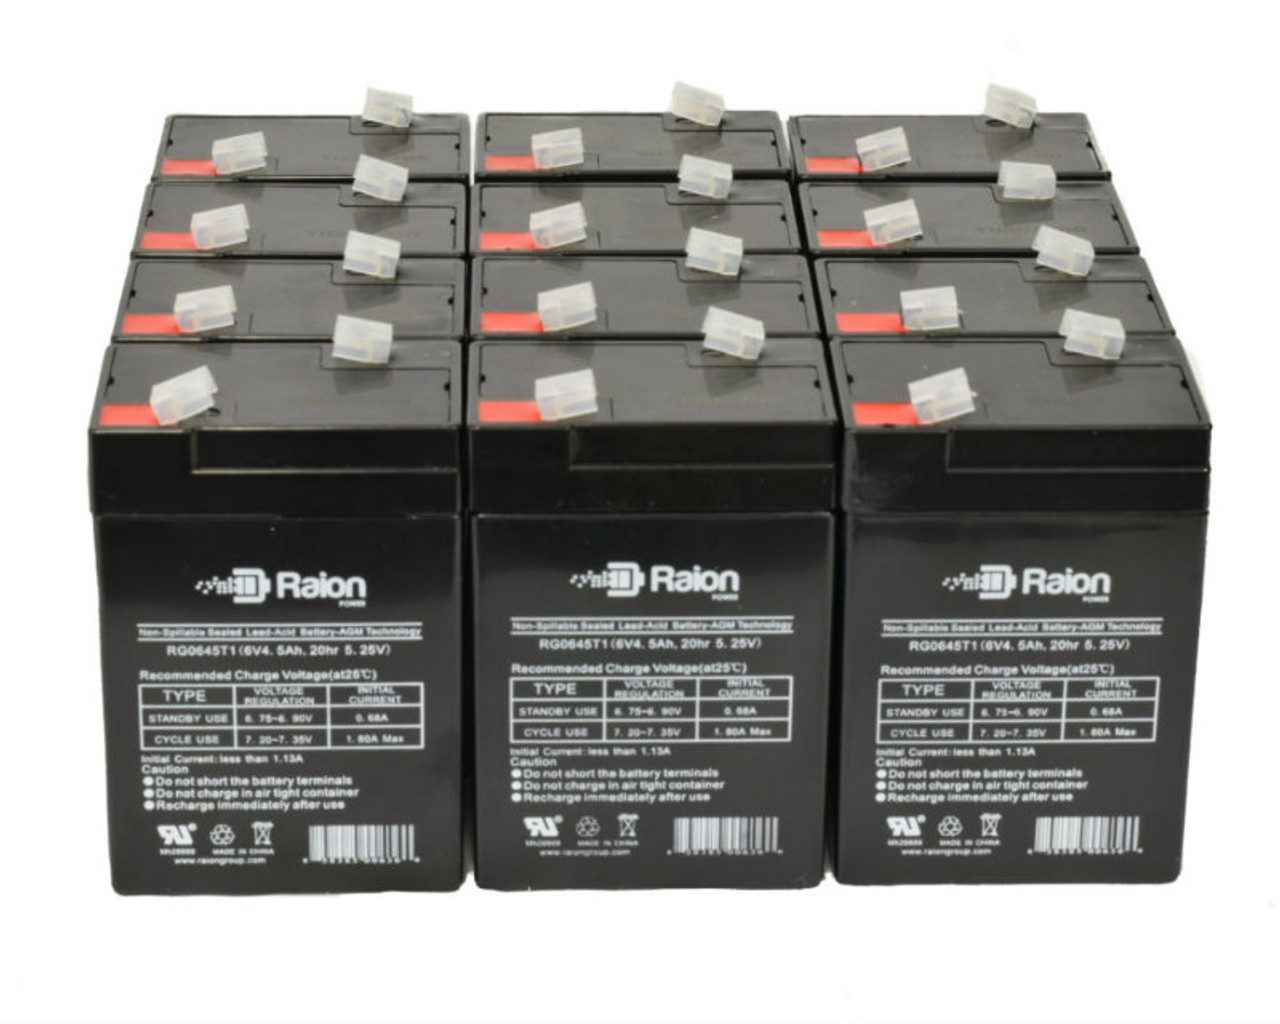 Raion Power 6V 4.5Ah Replacement Emergency Light Battery for Sonnenschein S200 - 12 Pack